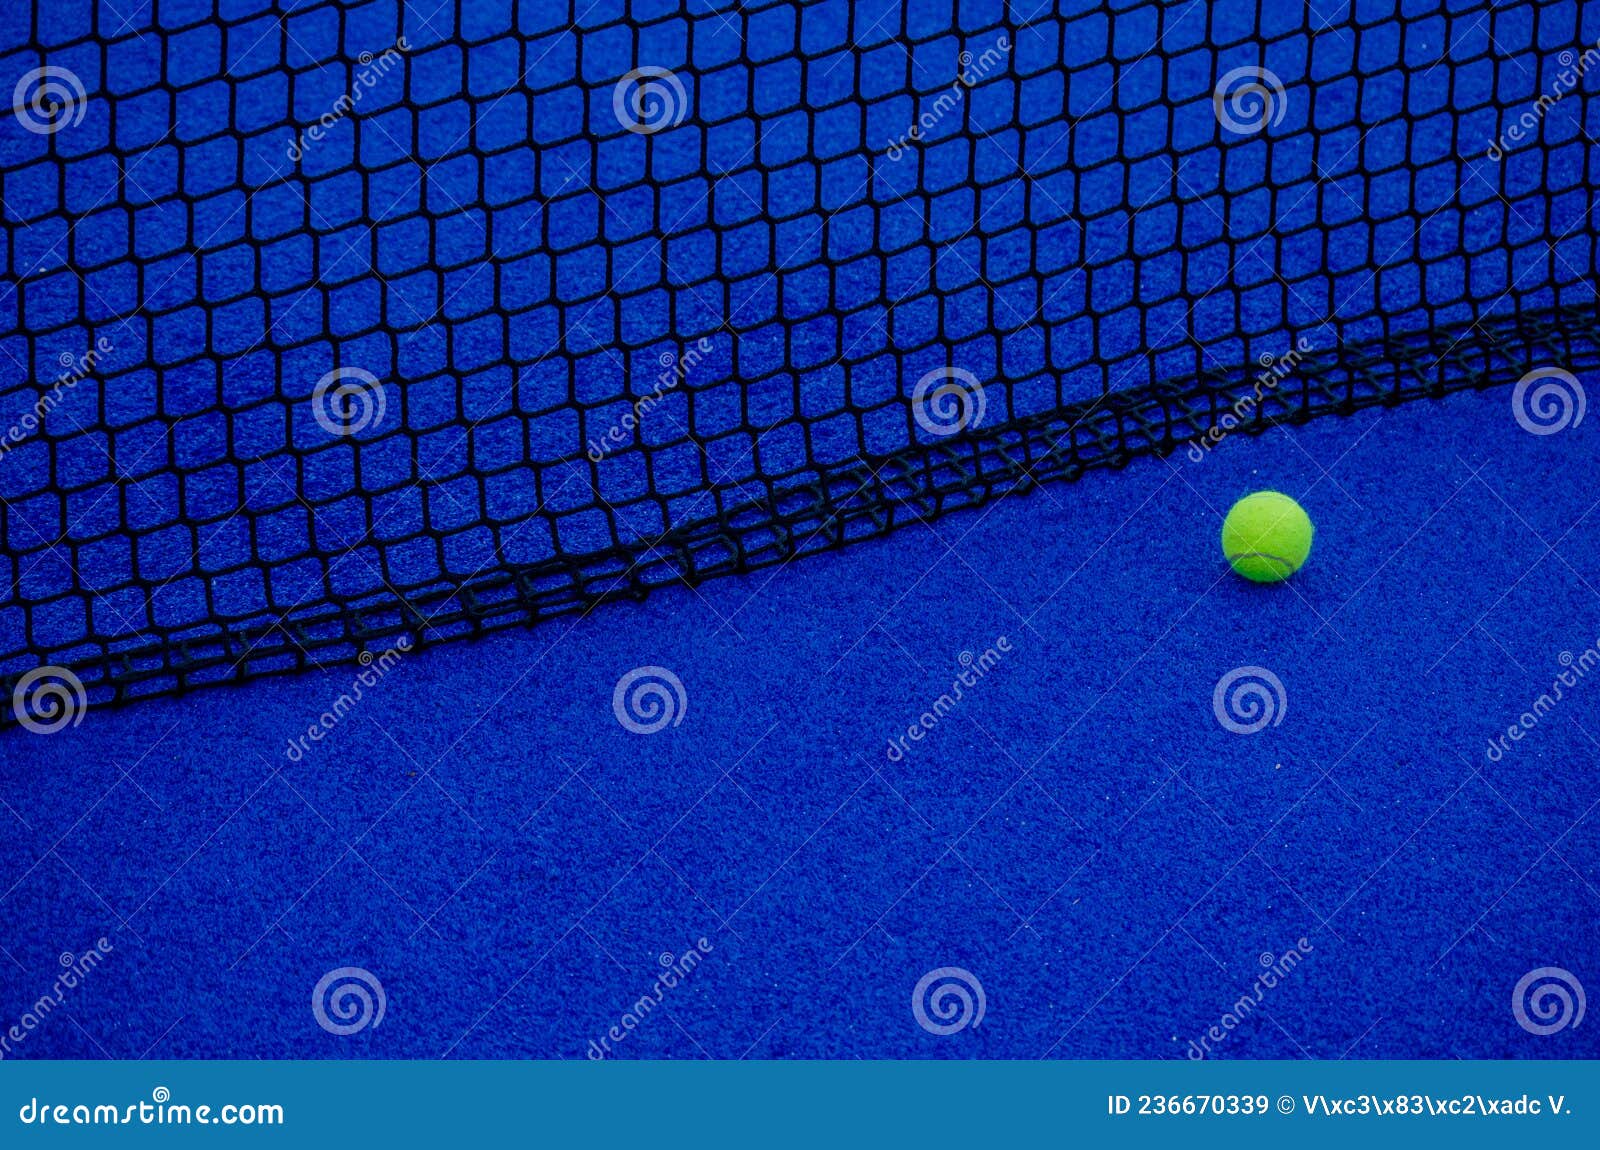 pista de paddle tennis. una pelota aislada cerca de la red